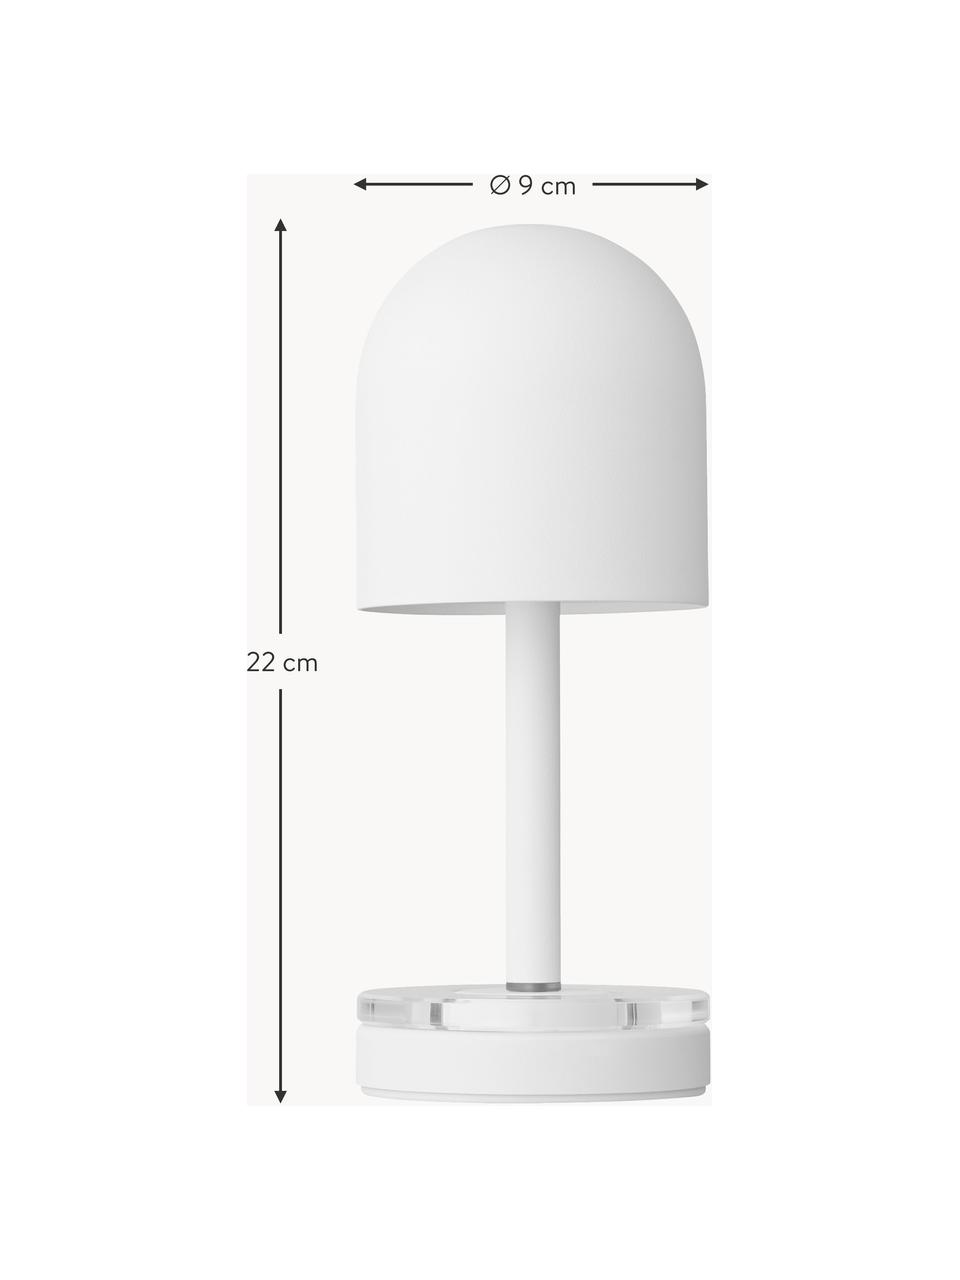 Malá prenosná exteriérová stolová LED lampa Luceo, Matná biela, Ø 9 x V 22 cm